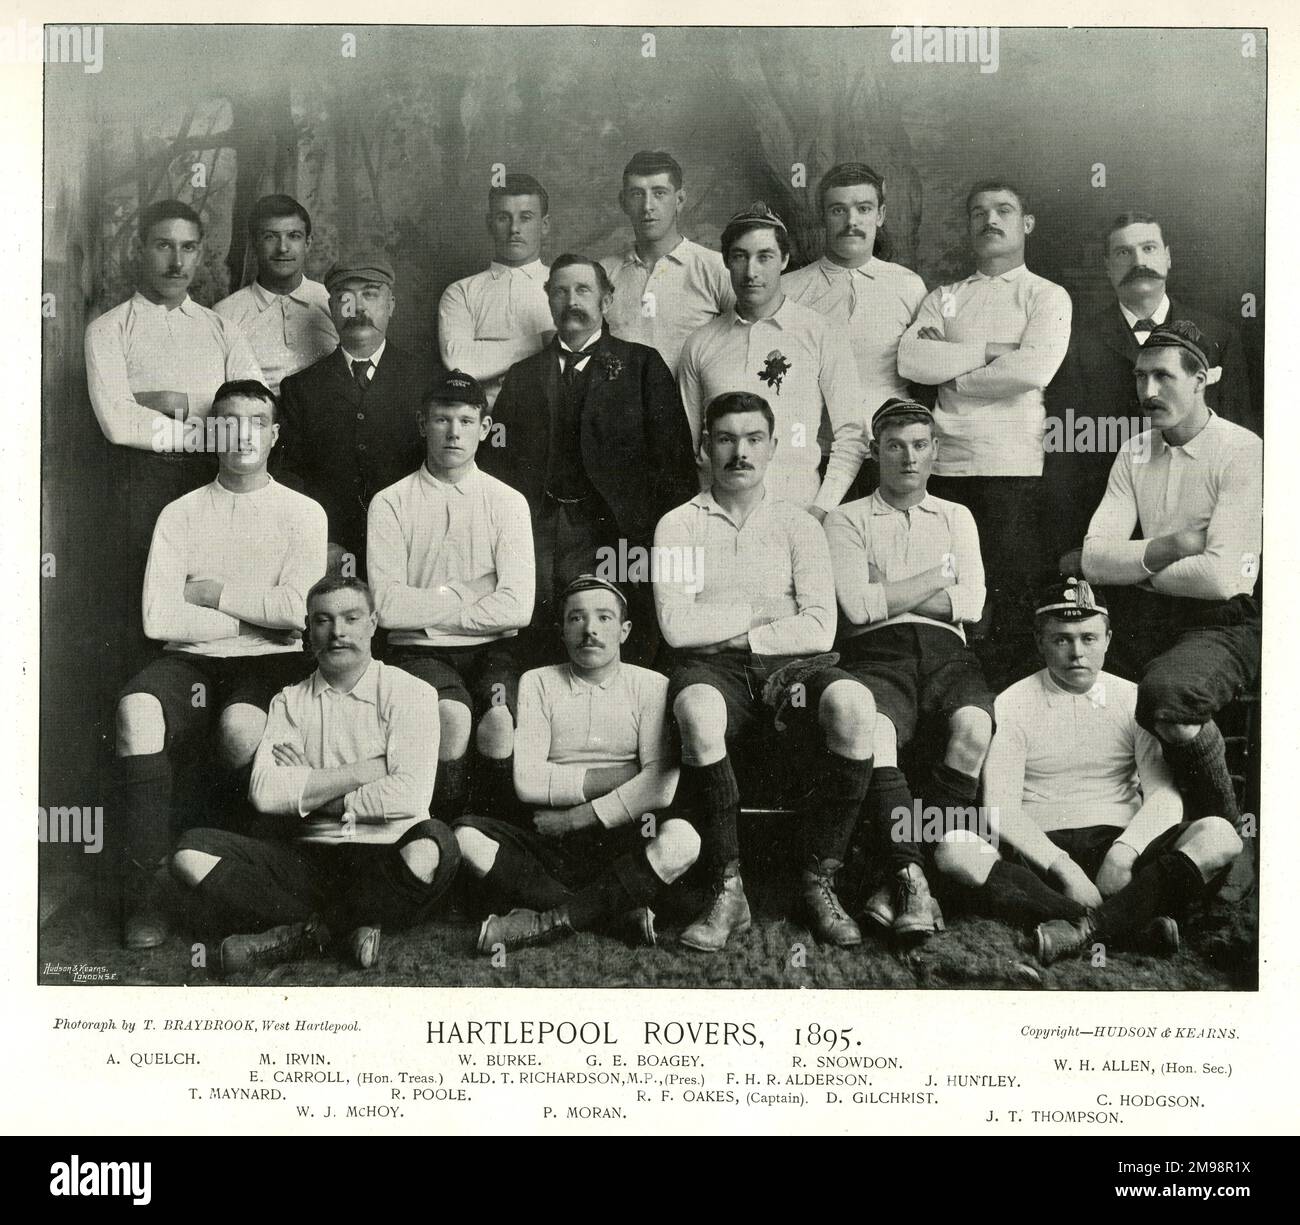 Hartlepool Rovers 1895 Rugby Team: Quelch, Irvin, Burke, Boagey, Snowdon, Allen, Carroll, Richardson, Alderson, Huntley, Maynard, Poole, Oakes, Gilchrist, Hodgson, McHoy, Moran, Thompson. Stock Photo